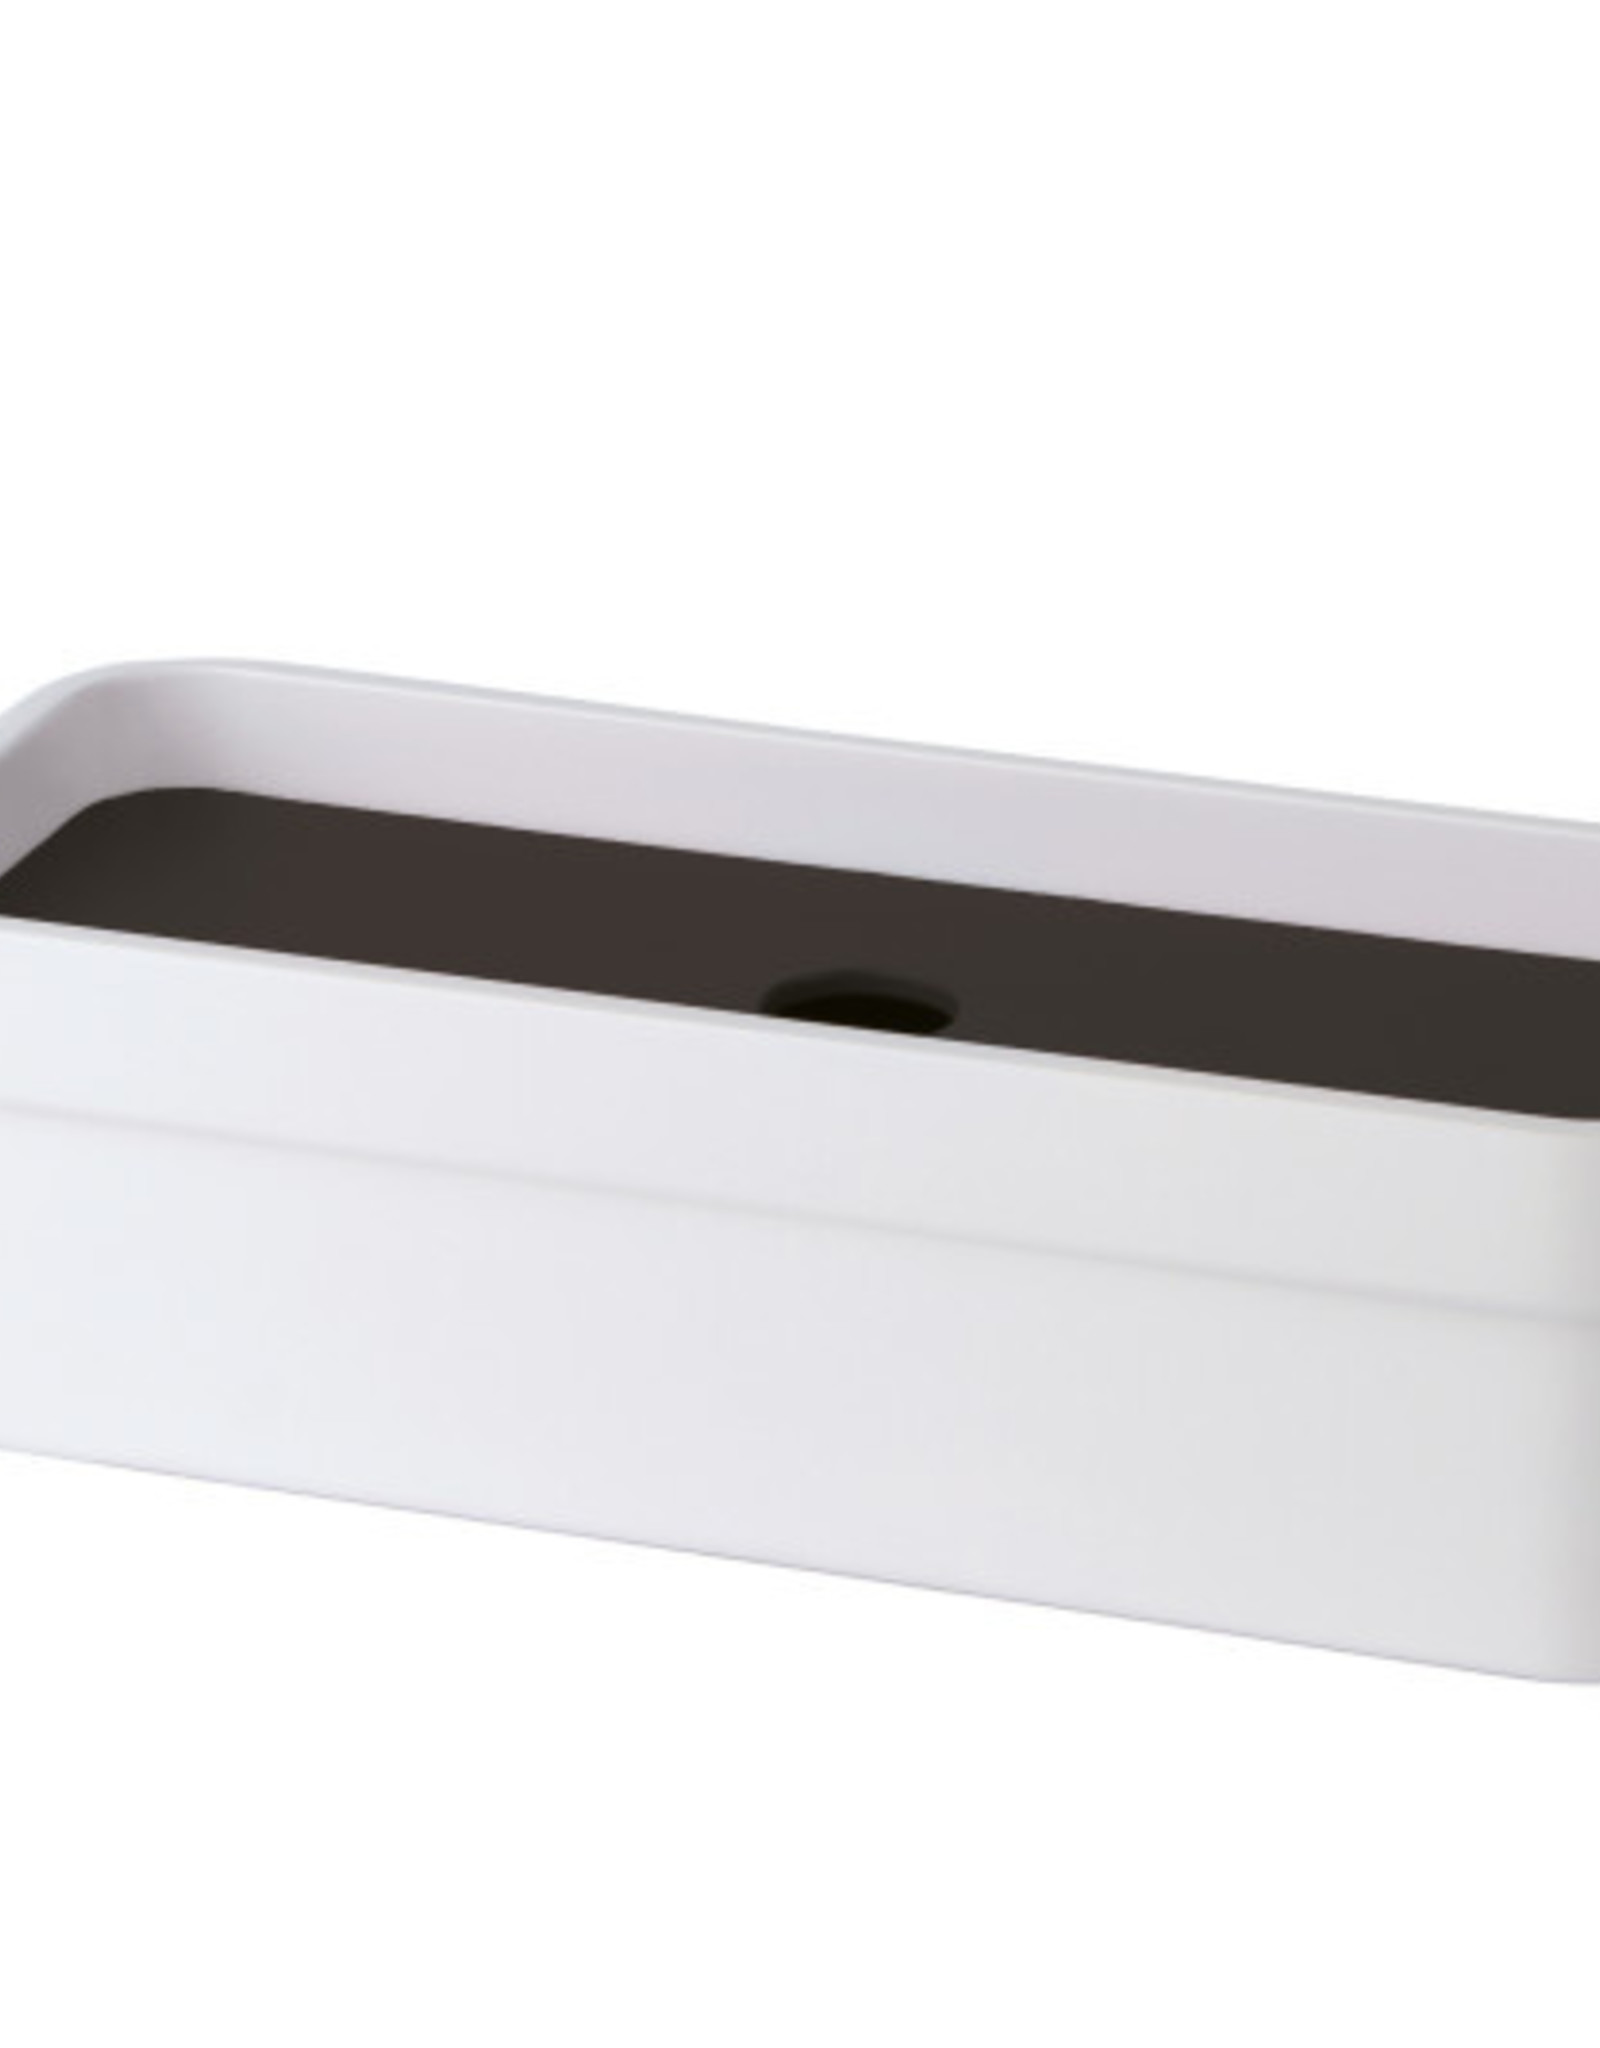 Lineabeta accessoire box, zwart aluminium/wit kunststof